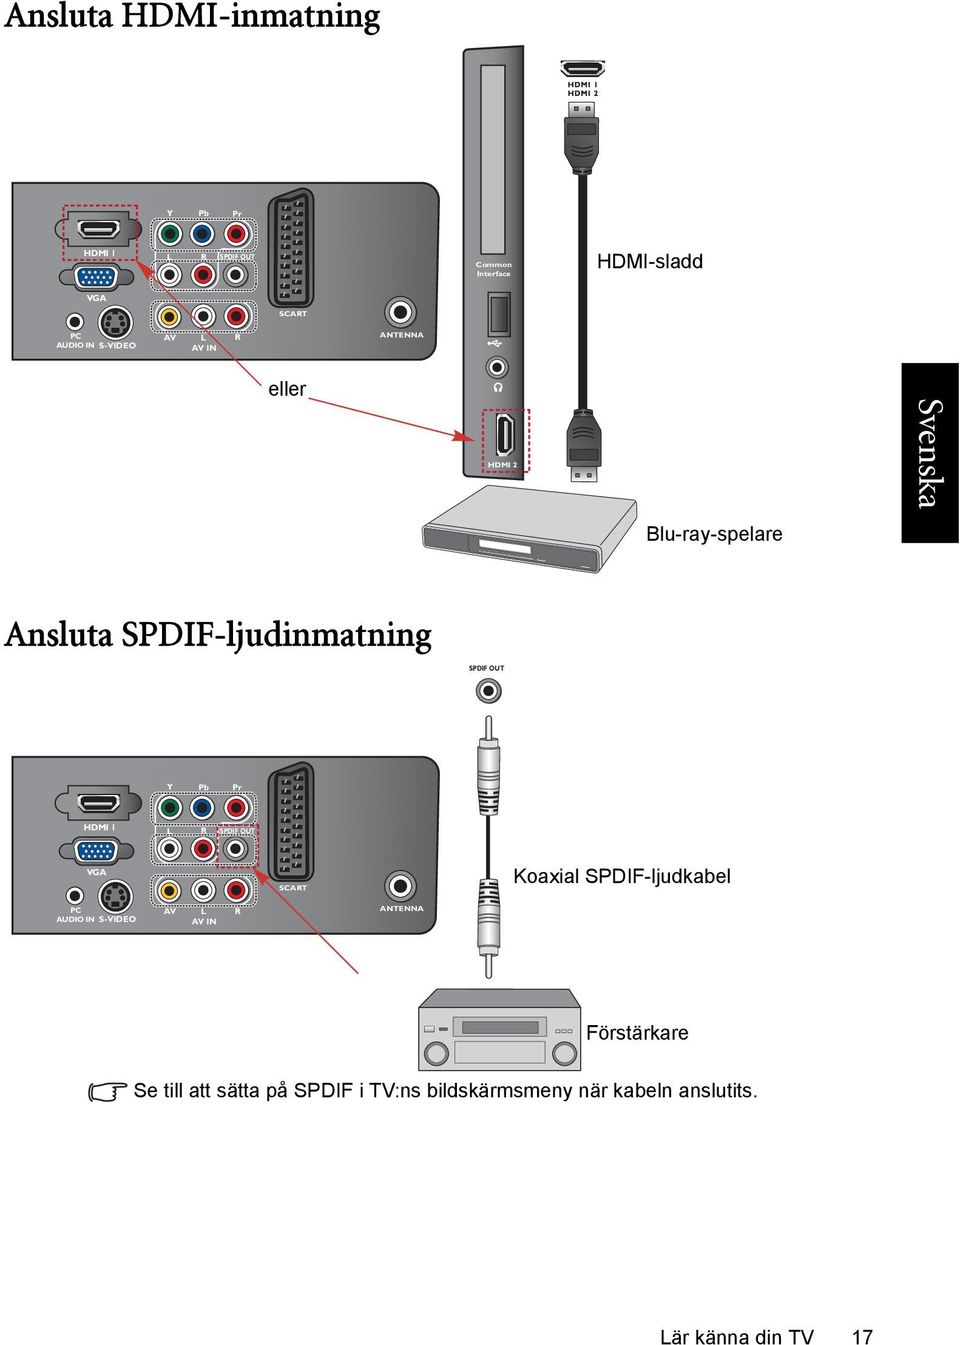 Pr HDMI 1 L R SPDIF OUT VGA SCART Koaxial SPDIF-ljudkabel PC AUDIO IN S-VIDEO AV L R AV IN ANTENNA